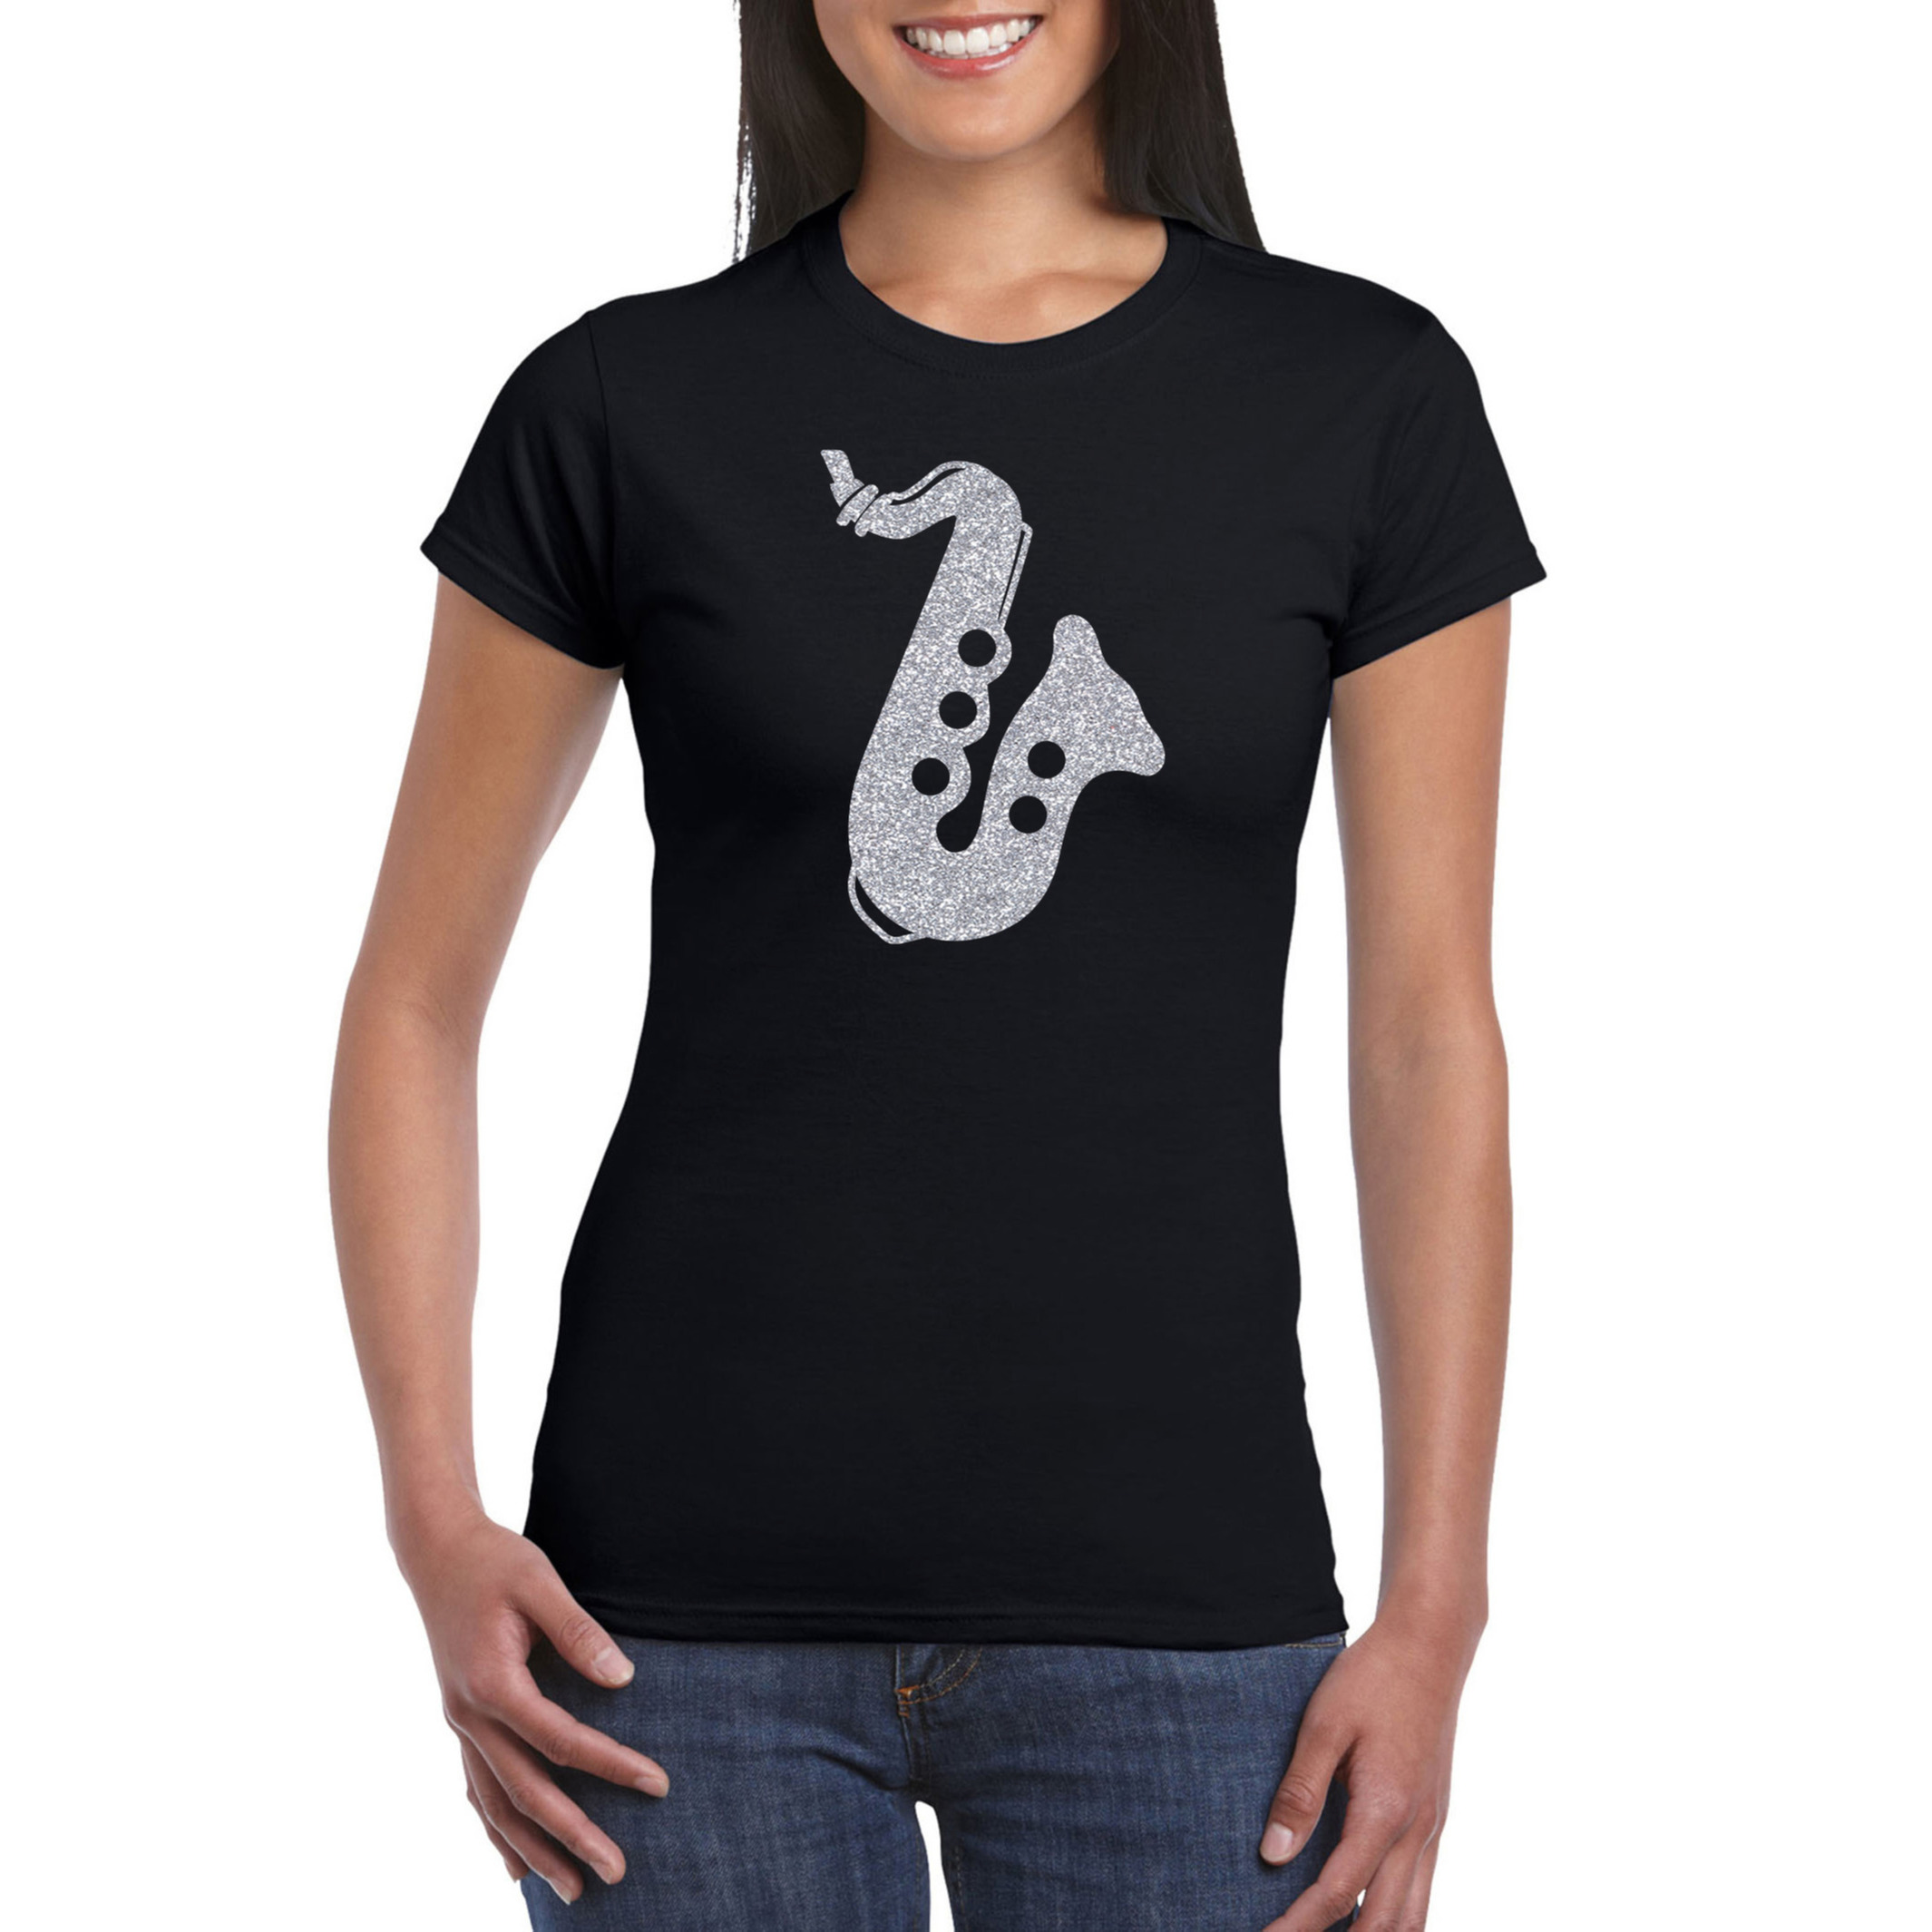 Zilveren muziek saxofoon t-shirt zwart voor dames saxofonisten outfit